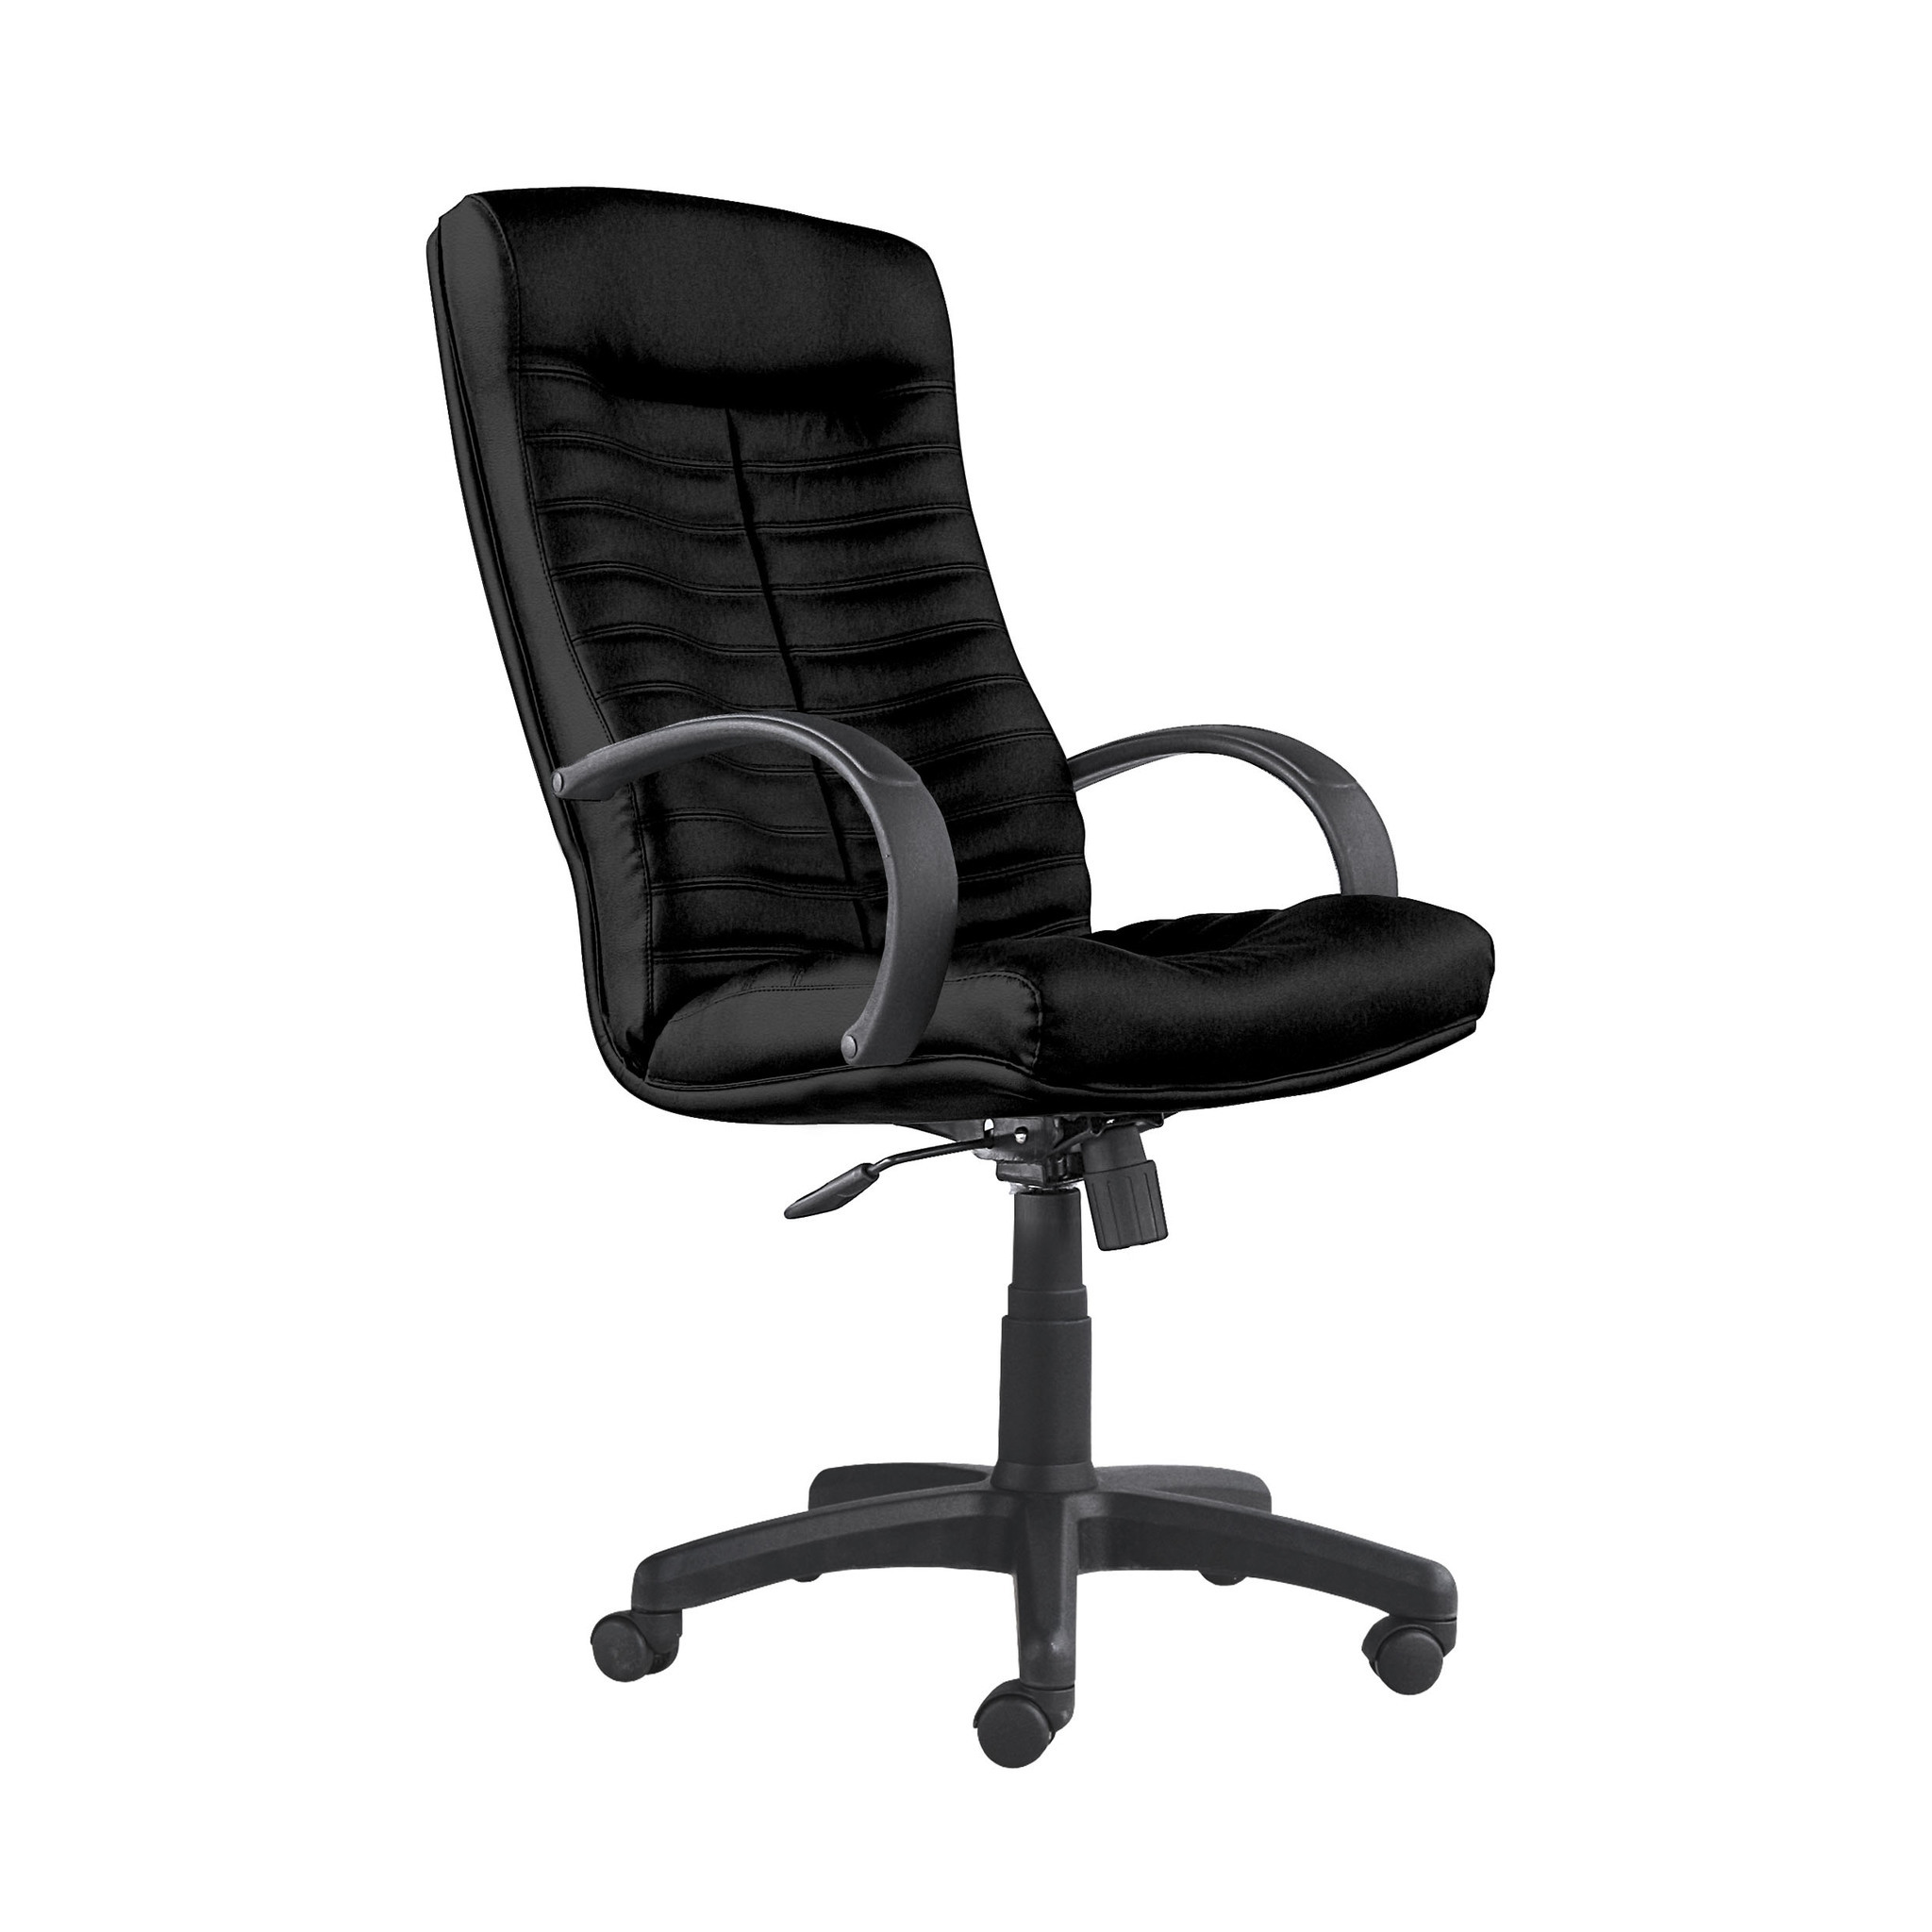 Компьютерное кресло Rondi Орион pl для руководителя